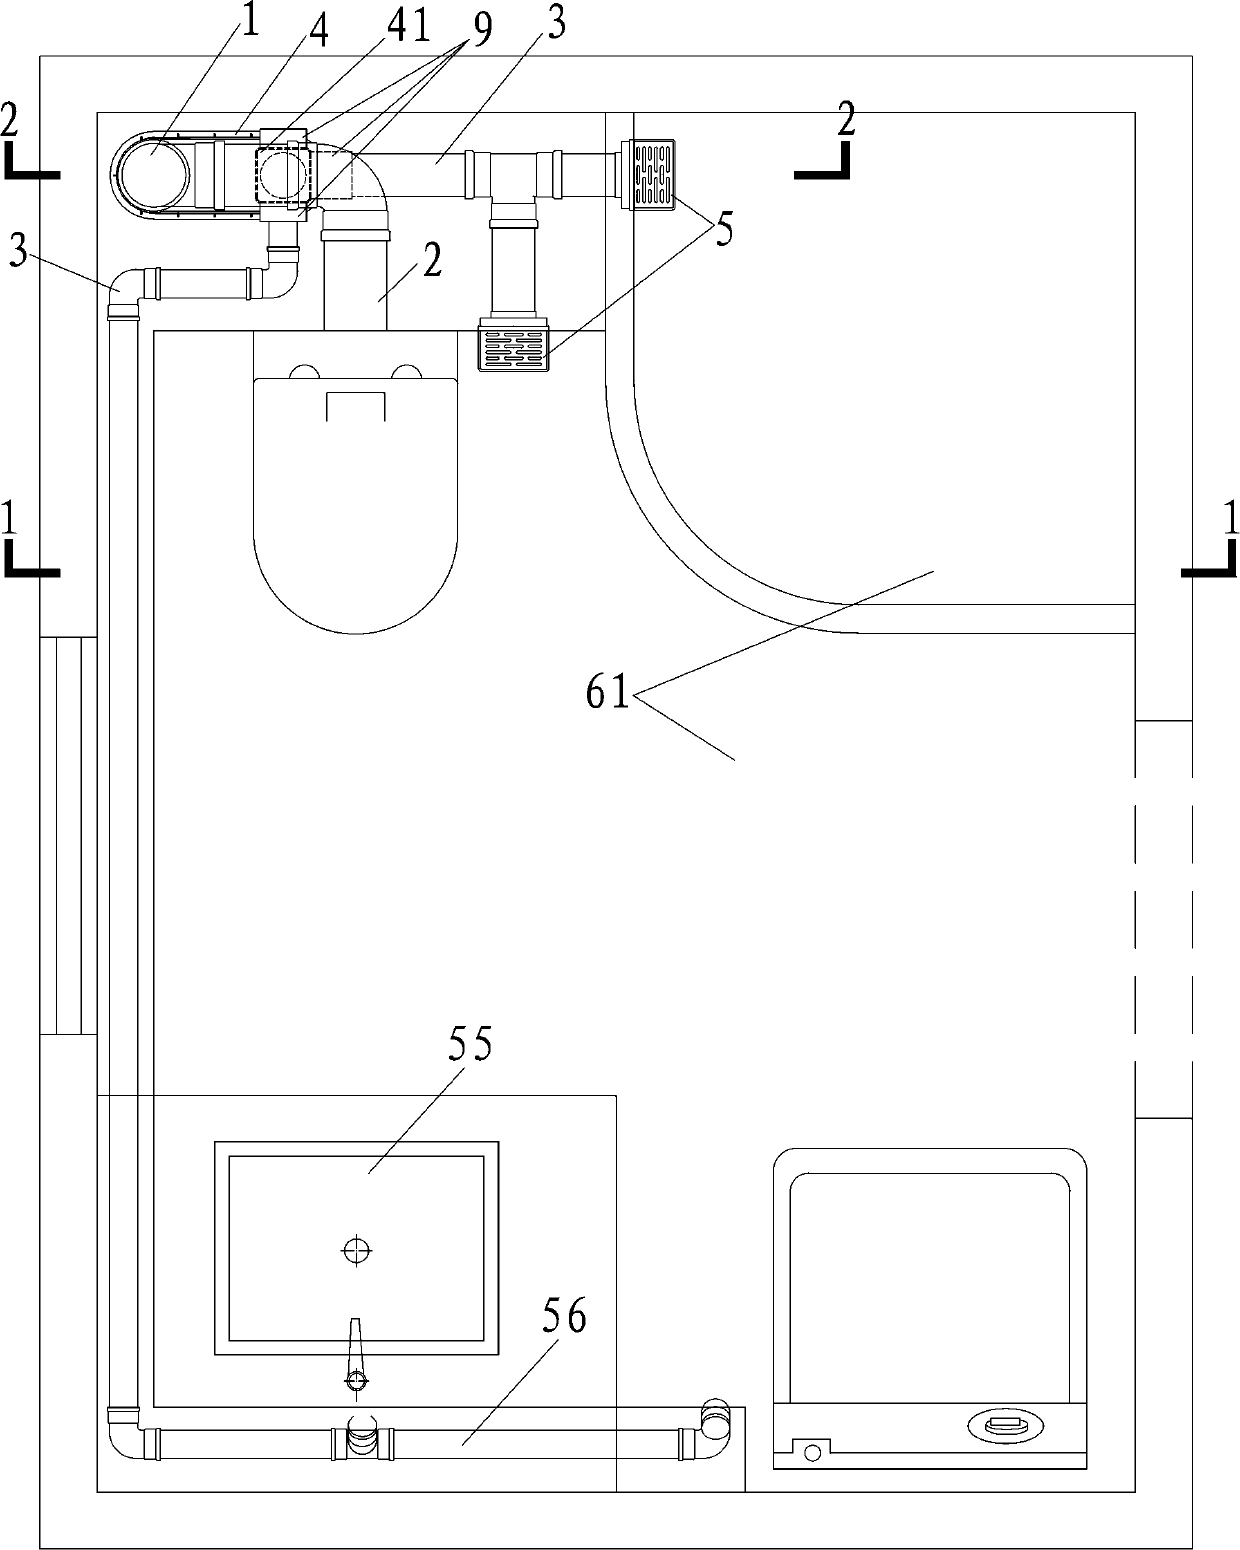 Non-descending board same-floor drainage system for toilet